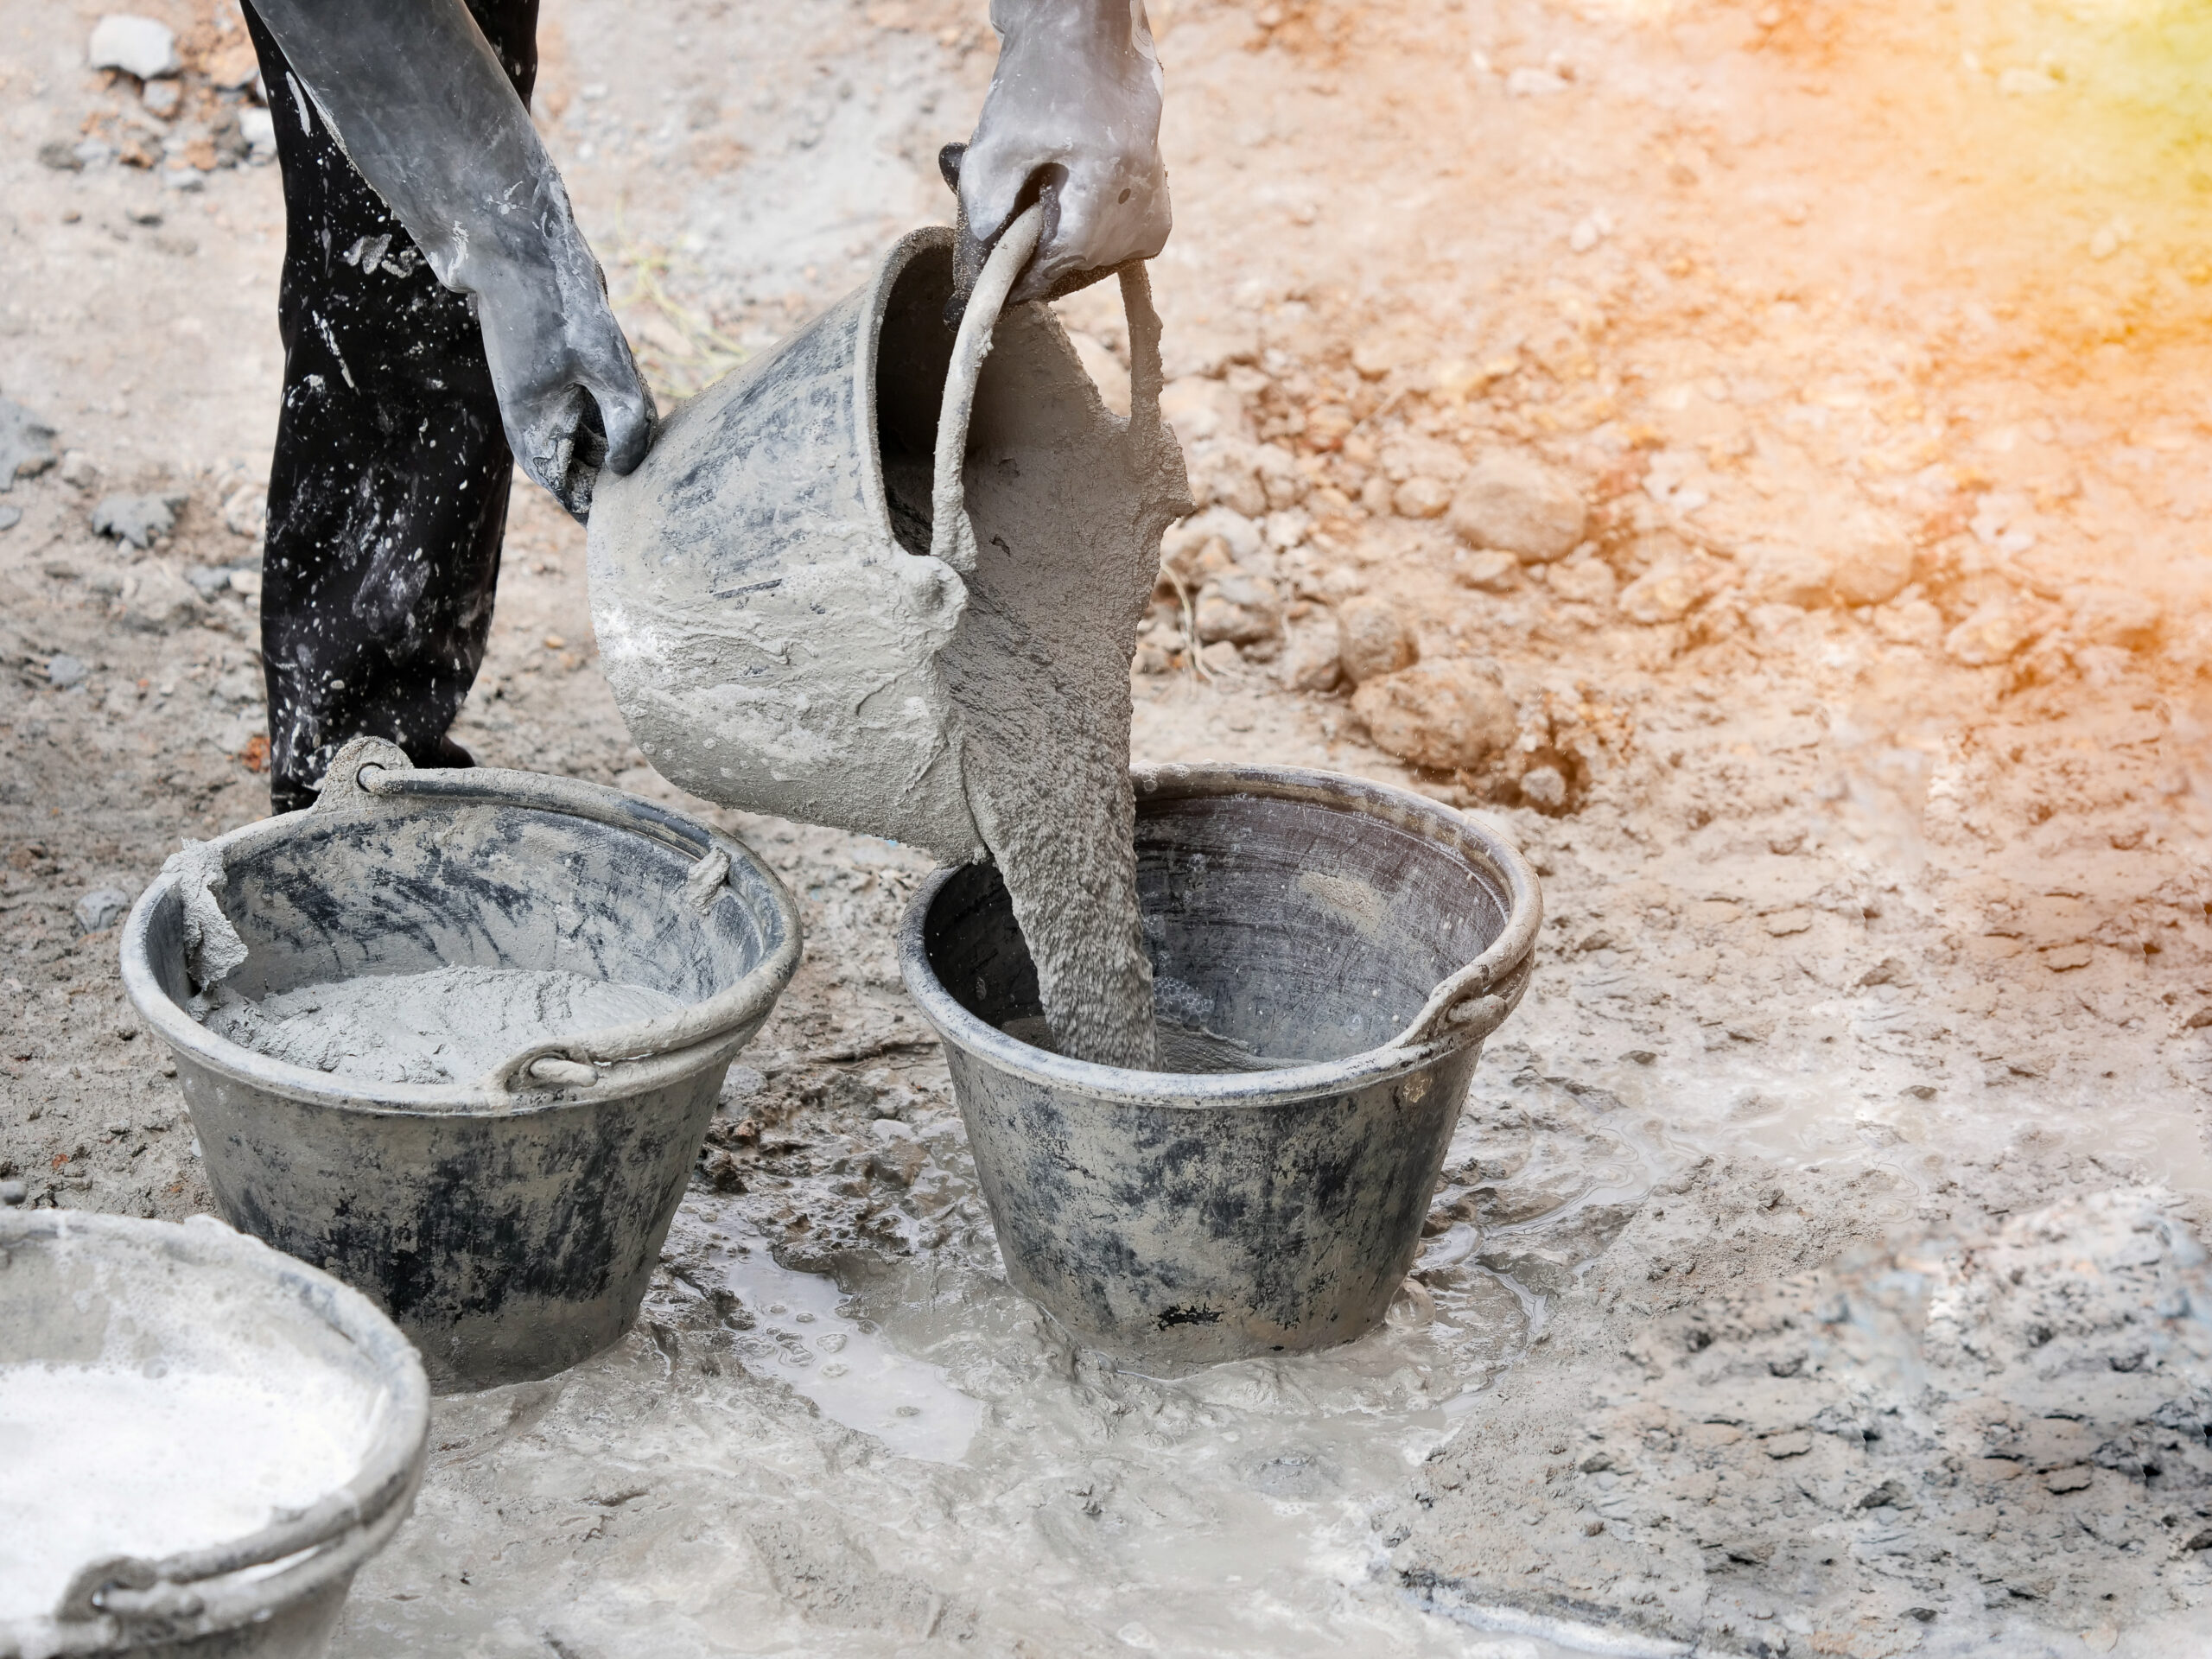 Settled Concrete - Image shows a construction worker pouring concrete in pails.